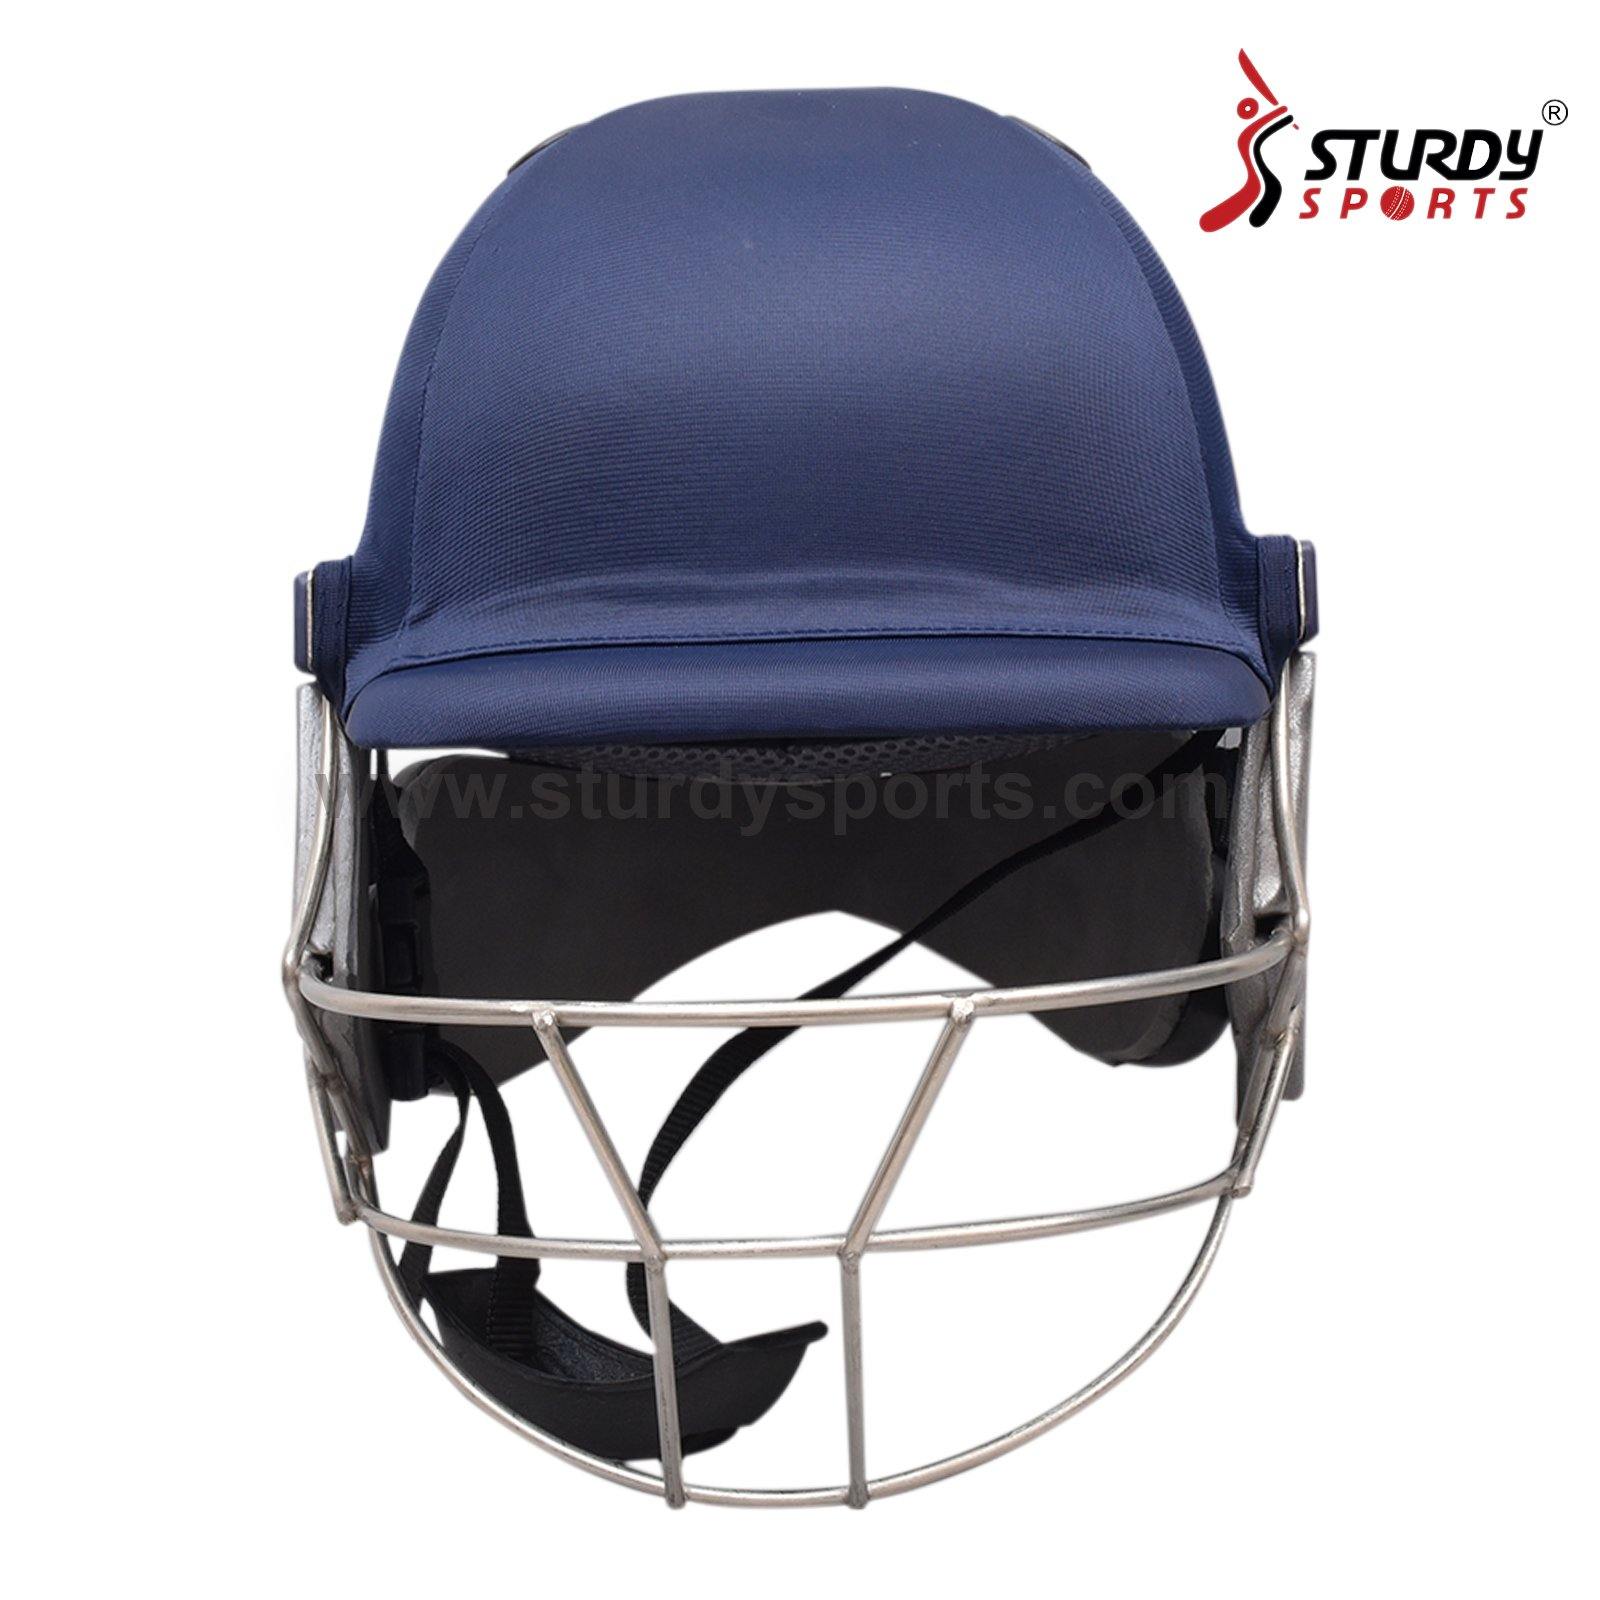 Sturdy Cheetah Cricket Helmet - Senior